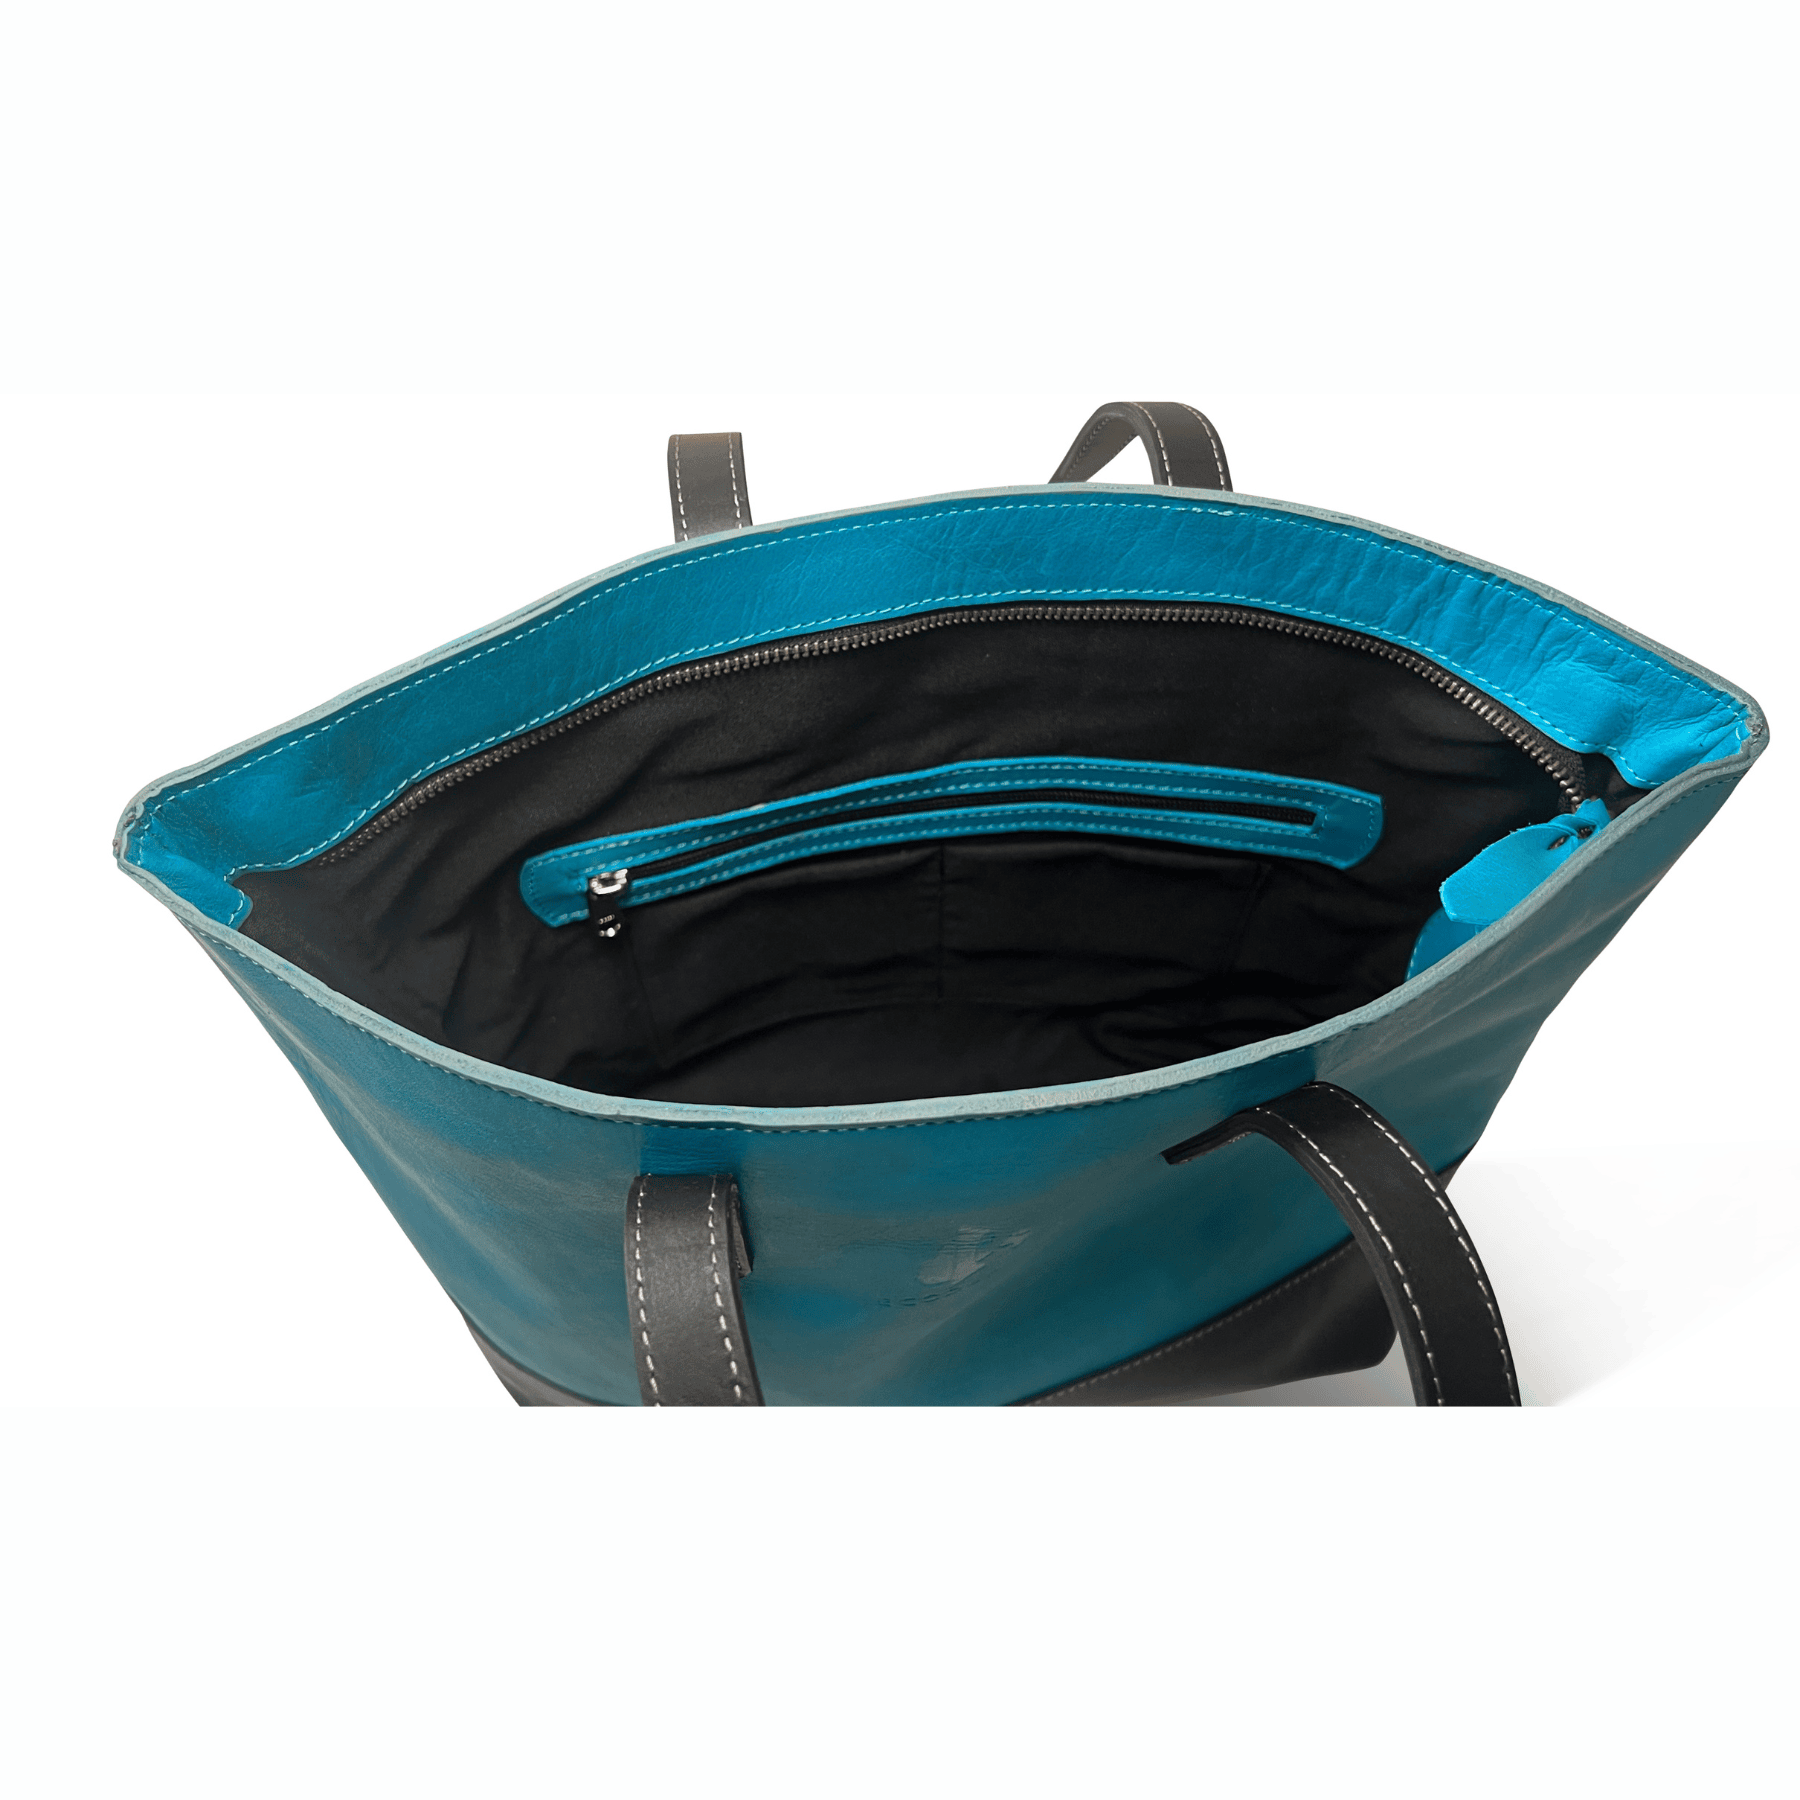 Mara Leather Bag - Navy Blue